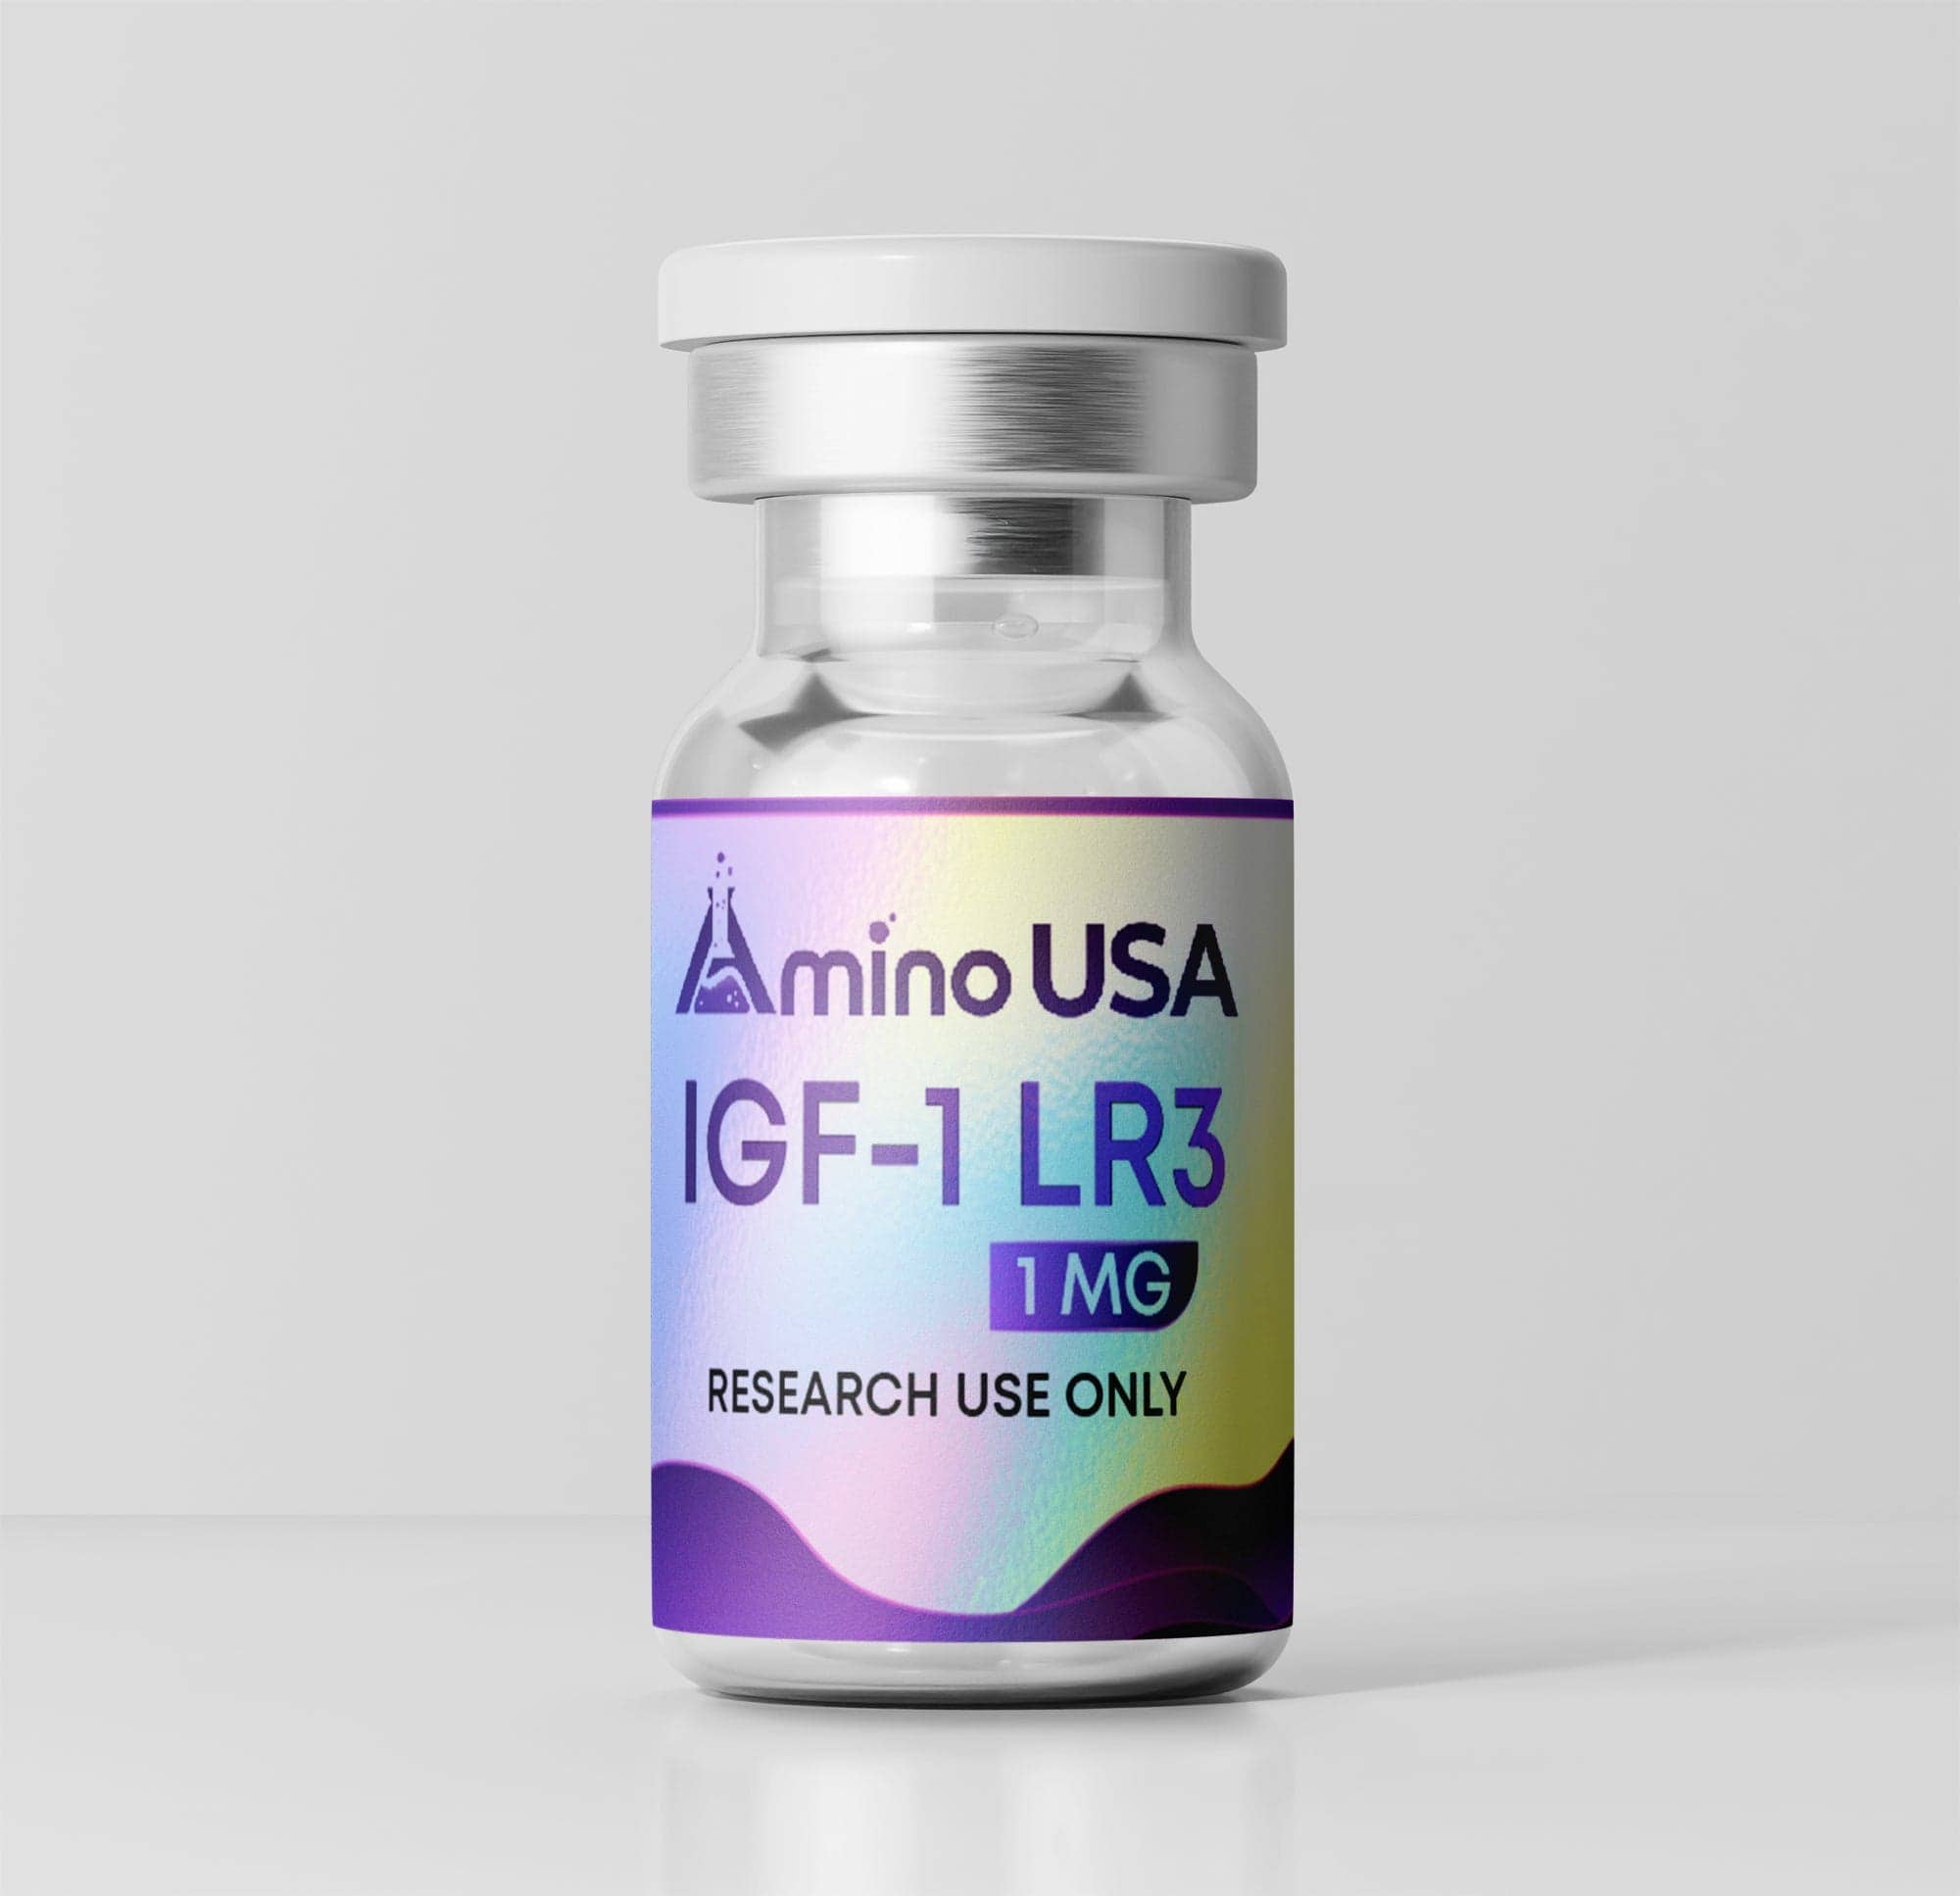 Amino USA Peptides IGF-1 LR3